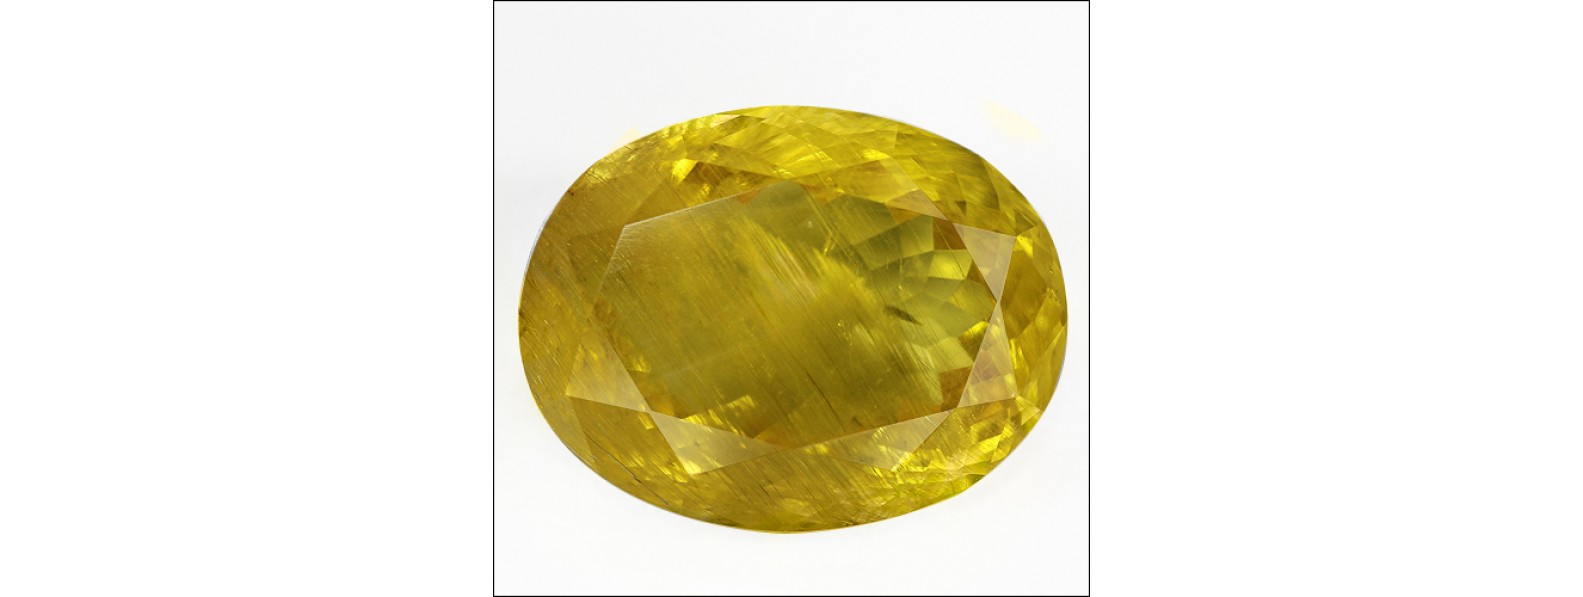 Buy best quality natural Danburite gemstones | Buy Danburite Stone Online - Gempiece